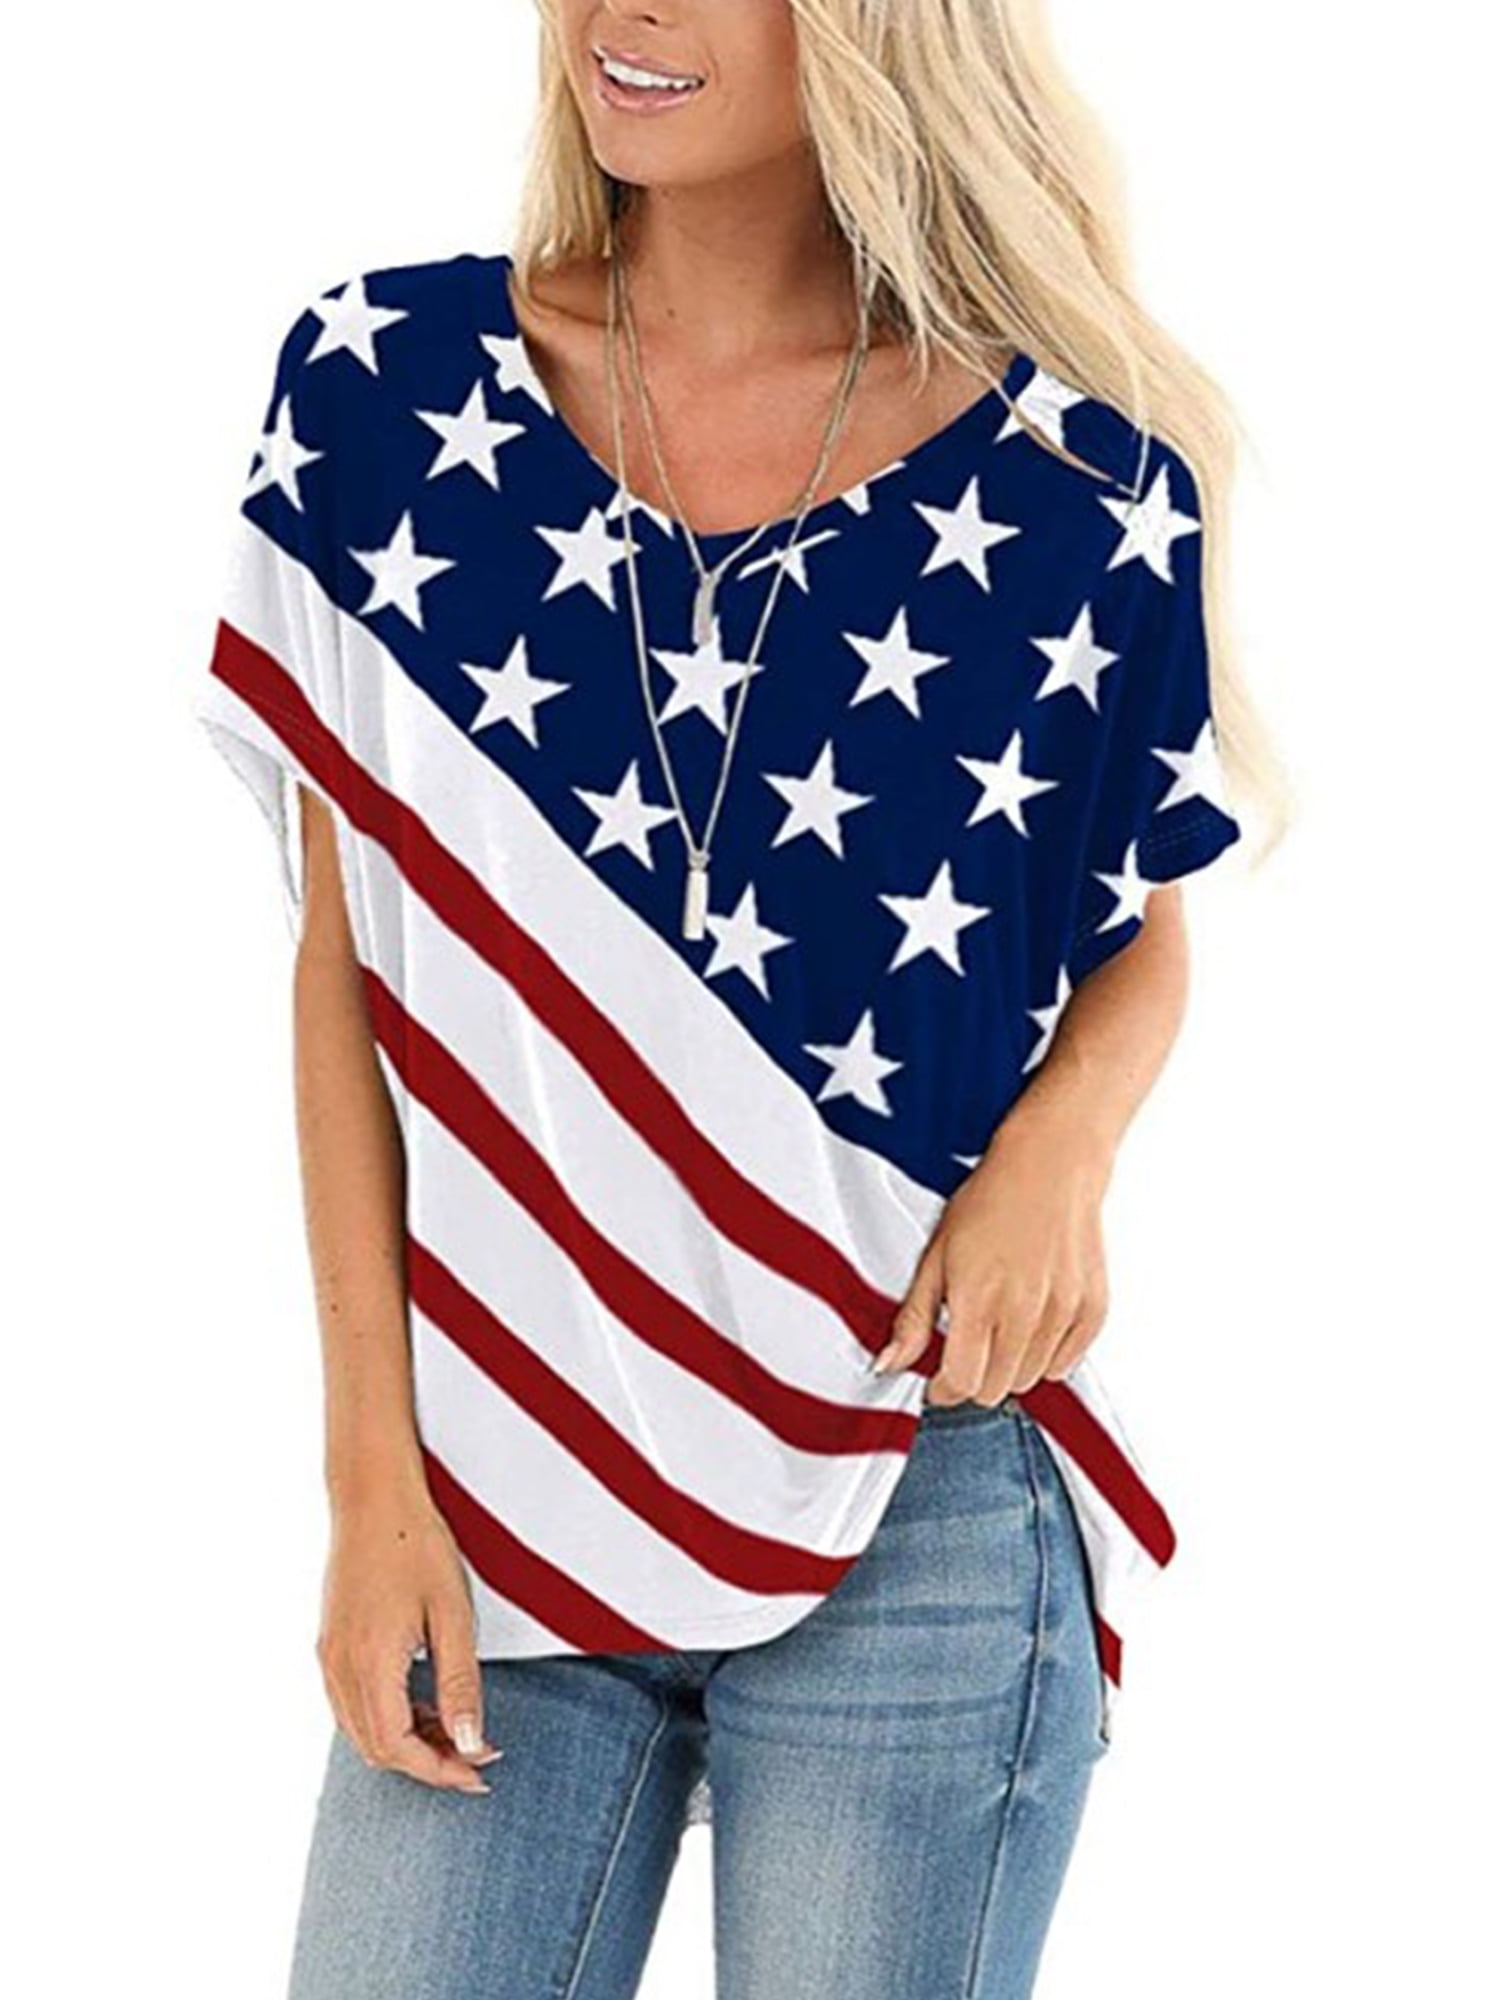 Tshirts for Womens,Womens American Flag Shirt 4th of July Shirts Patriotic V Neck Short Sleeve Tee Summer Tops 